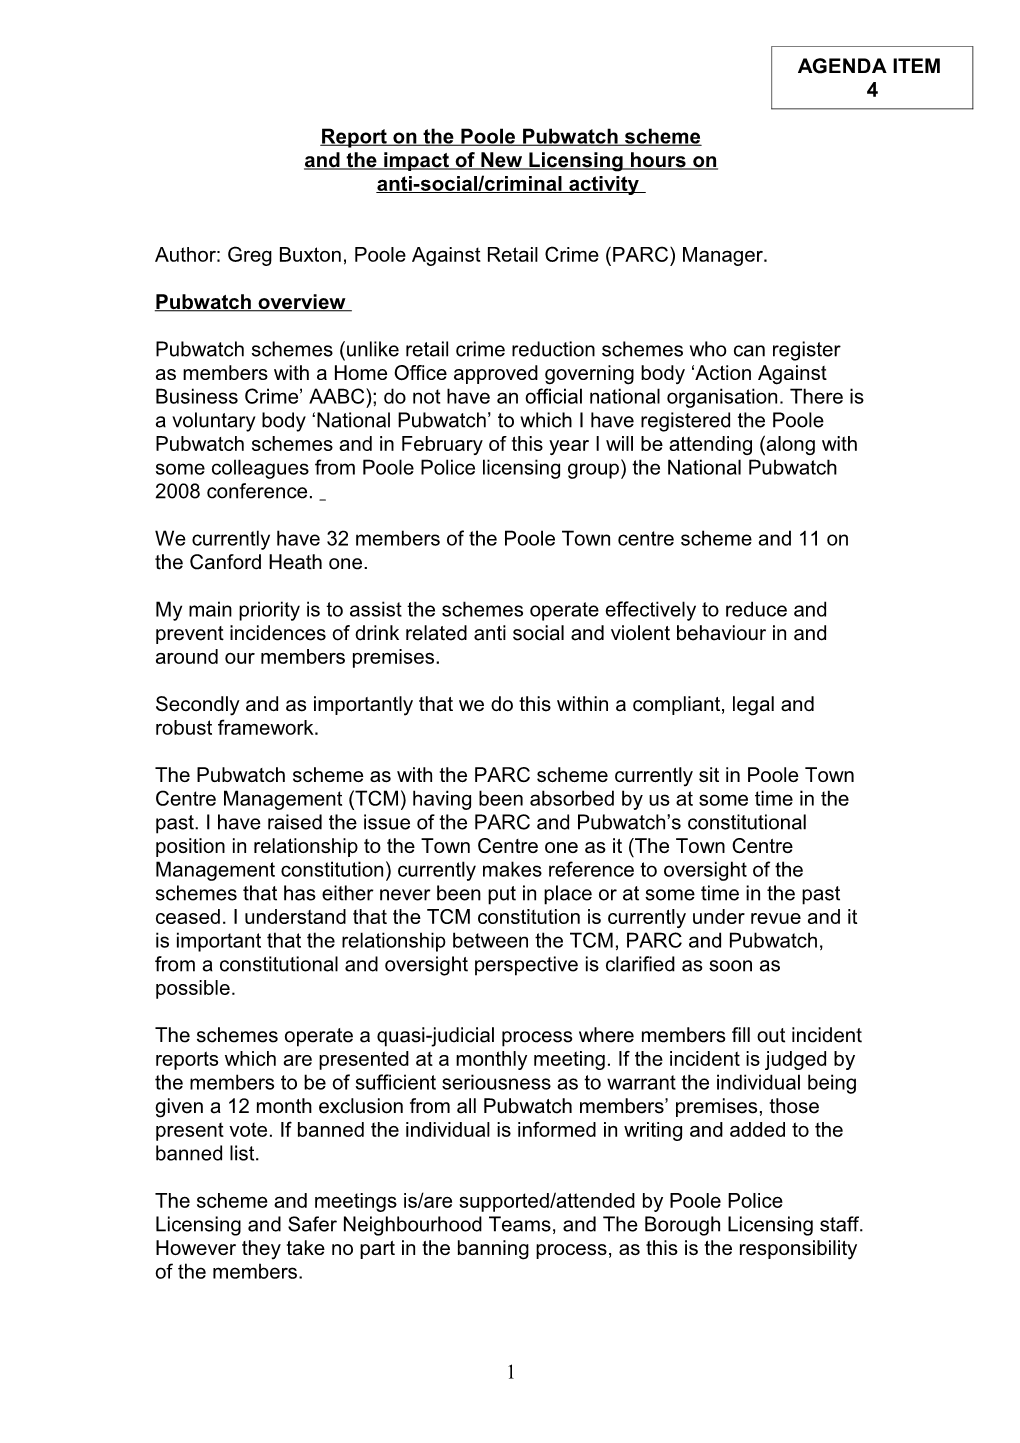 Poole Pubwatch Scheme